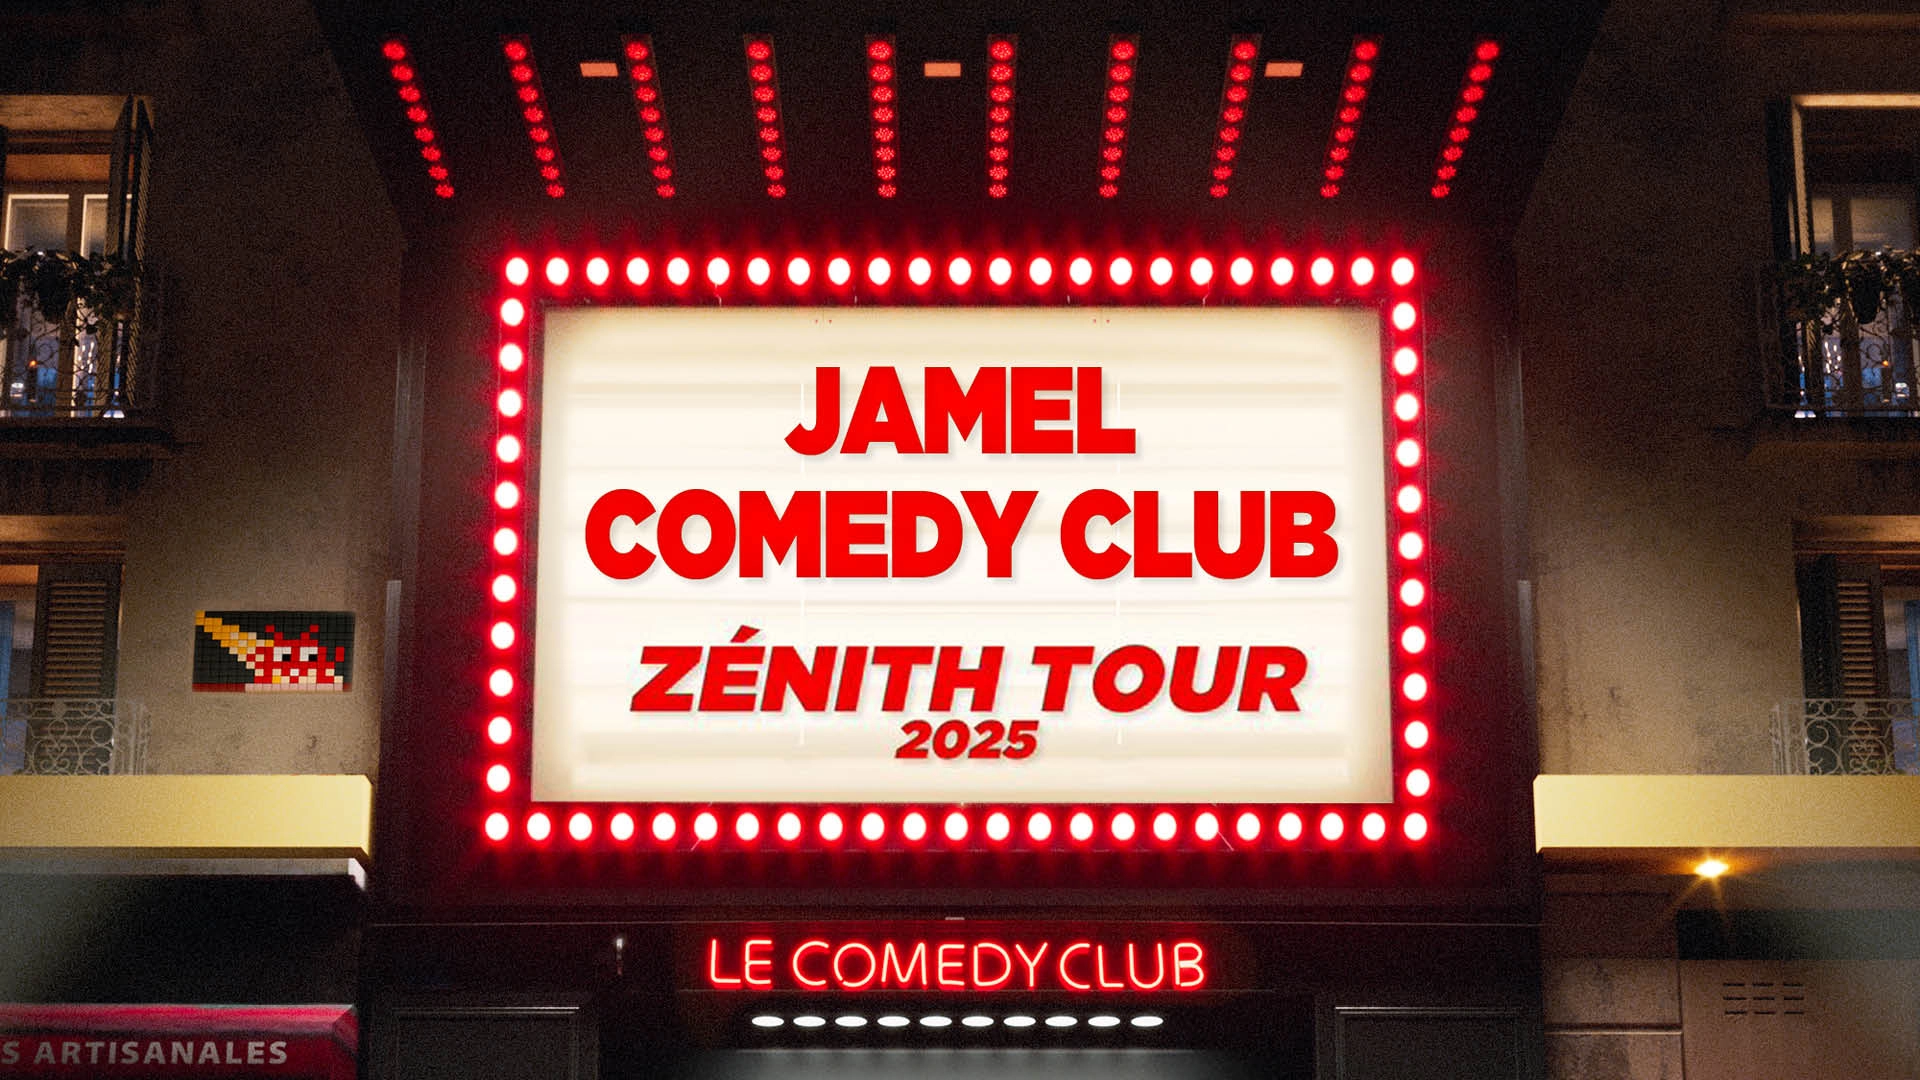 Jamel Comedy Club Zenith Tour al Arkea Arena Tickets